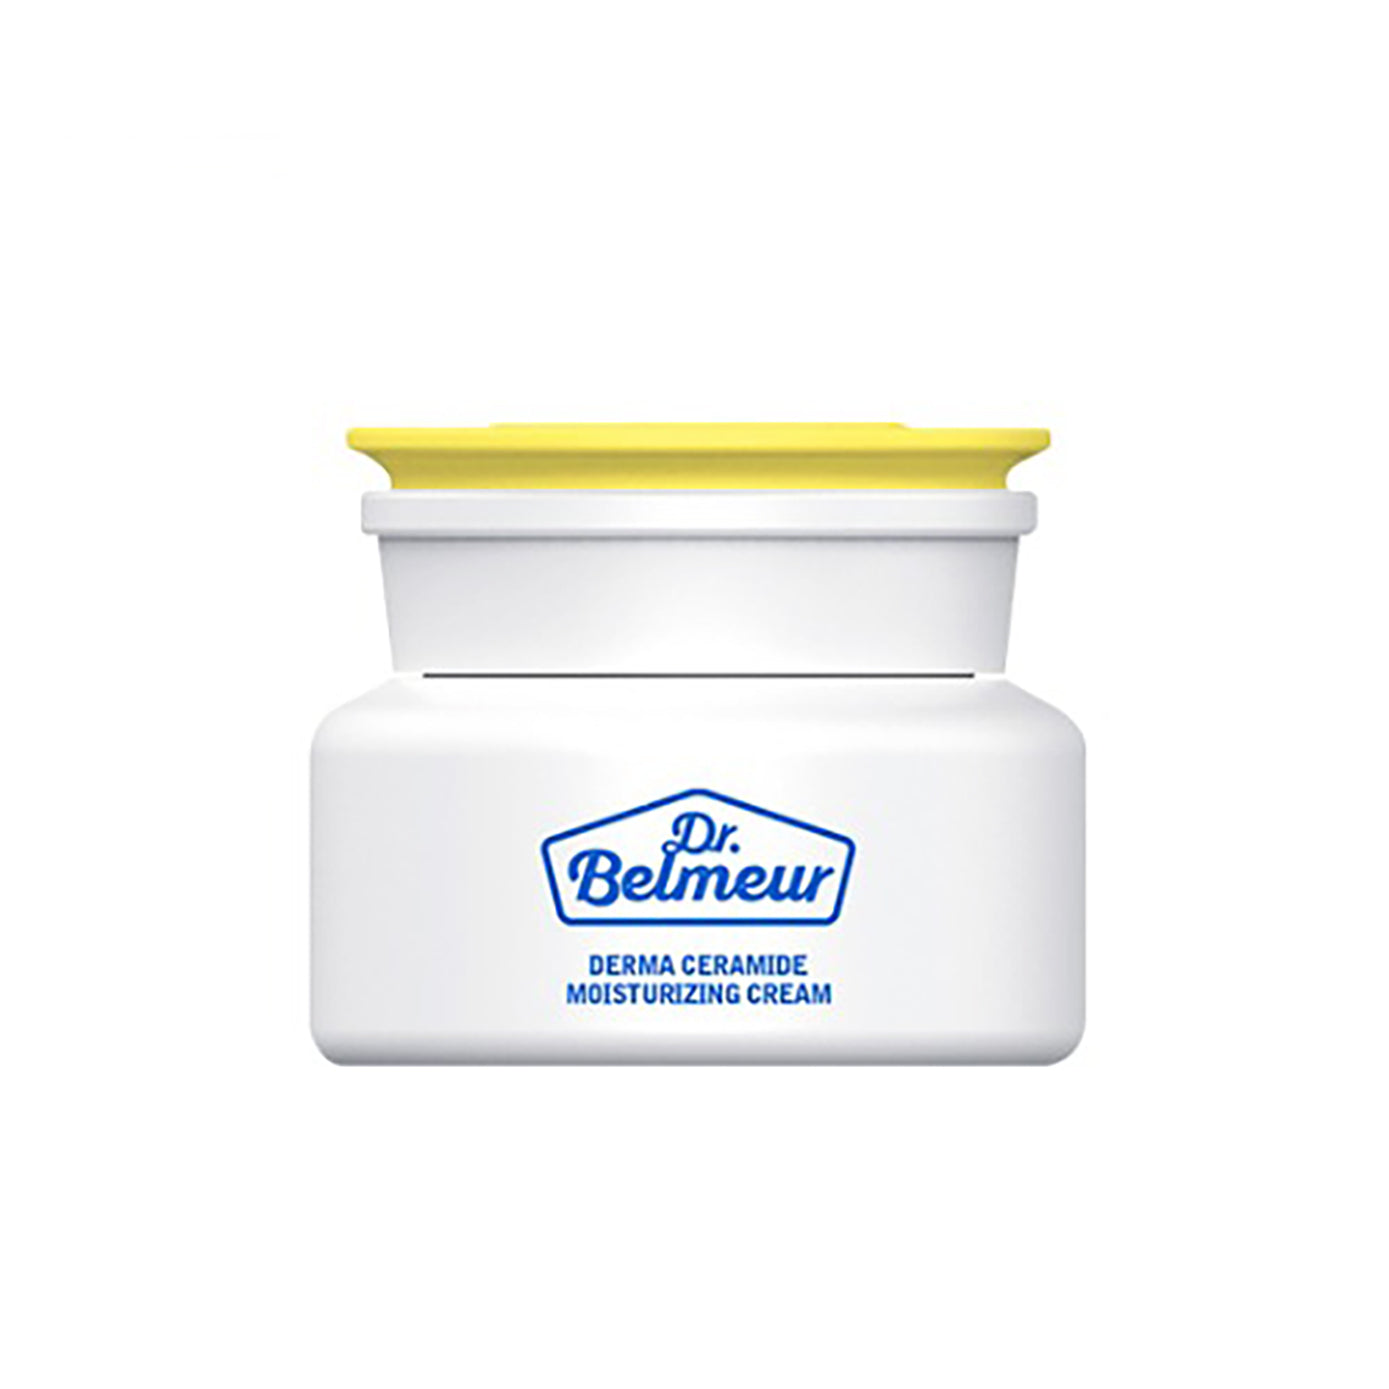 Dr. Belmeur Derma Ceramide Moisturizing Cream - 50ml